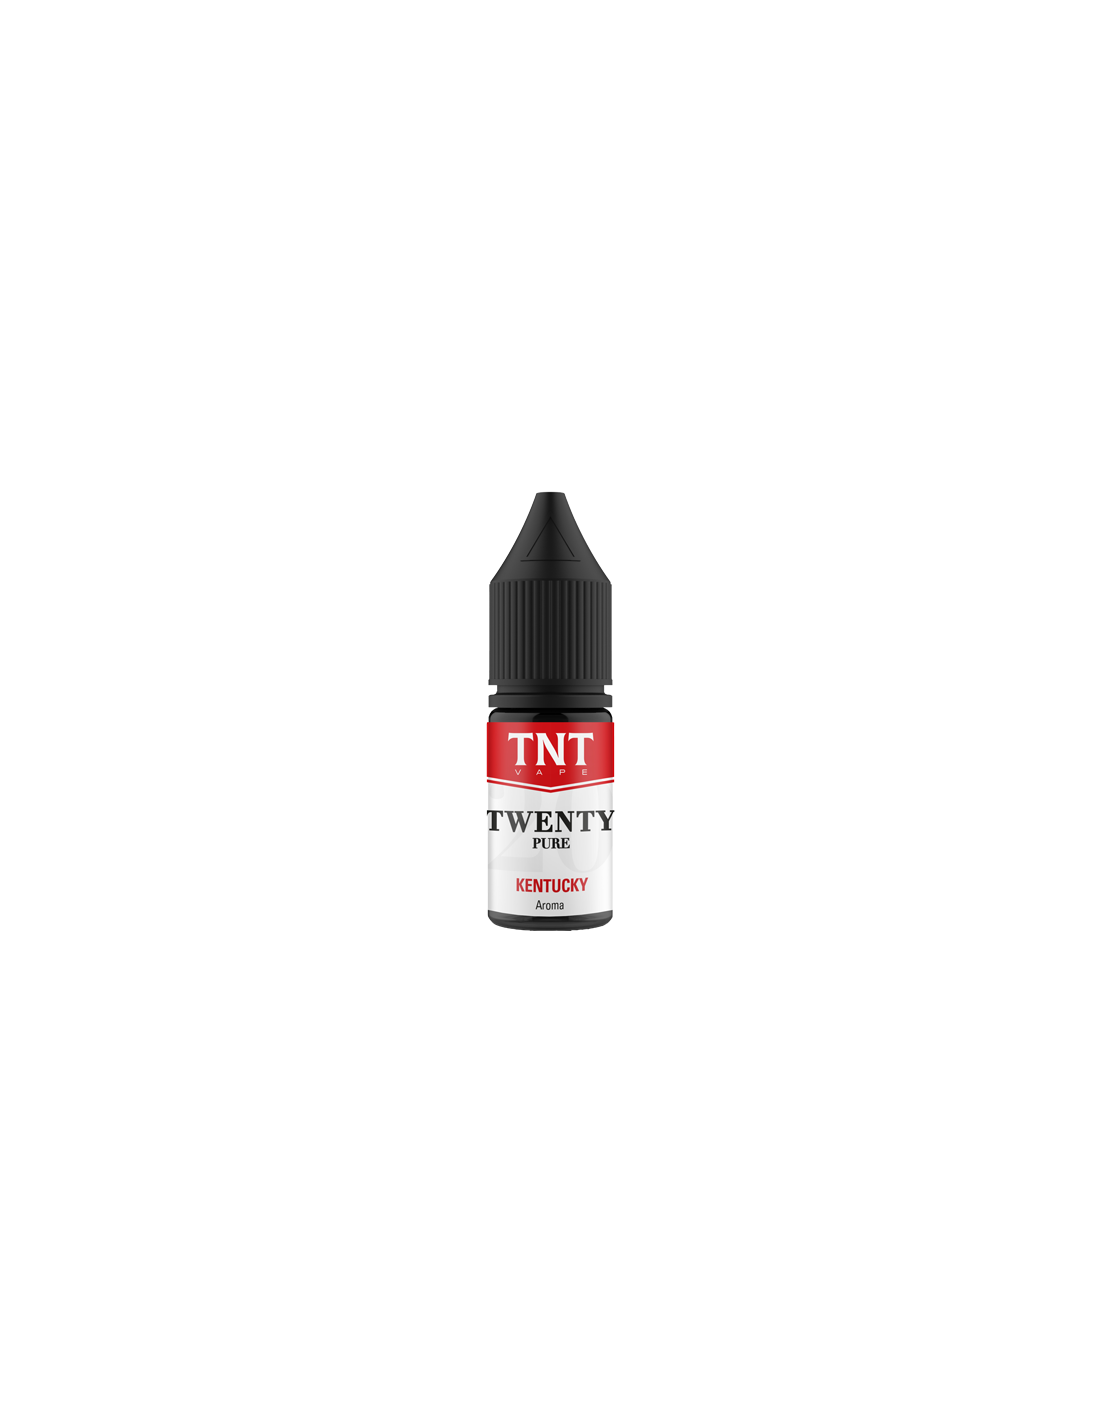 TNT Vape Kentucky Twenty Pure Distillati Aroma Concentrato 10ml Tabacco